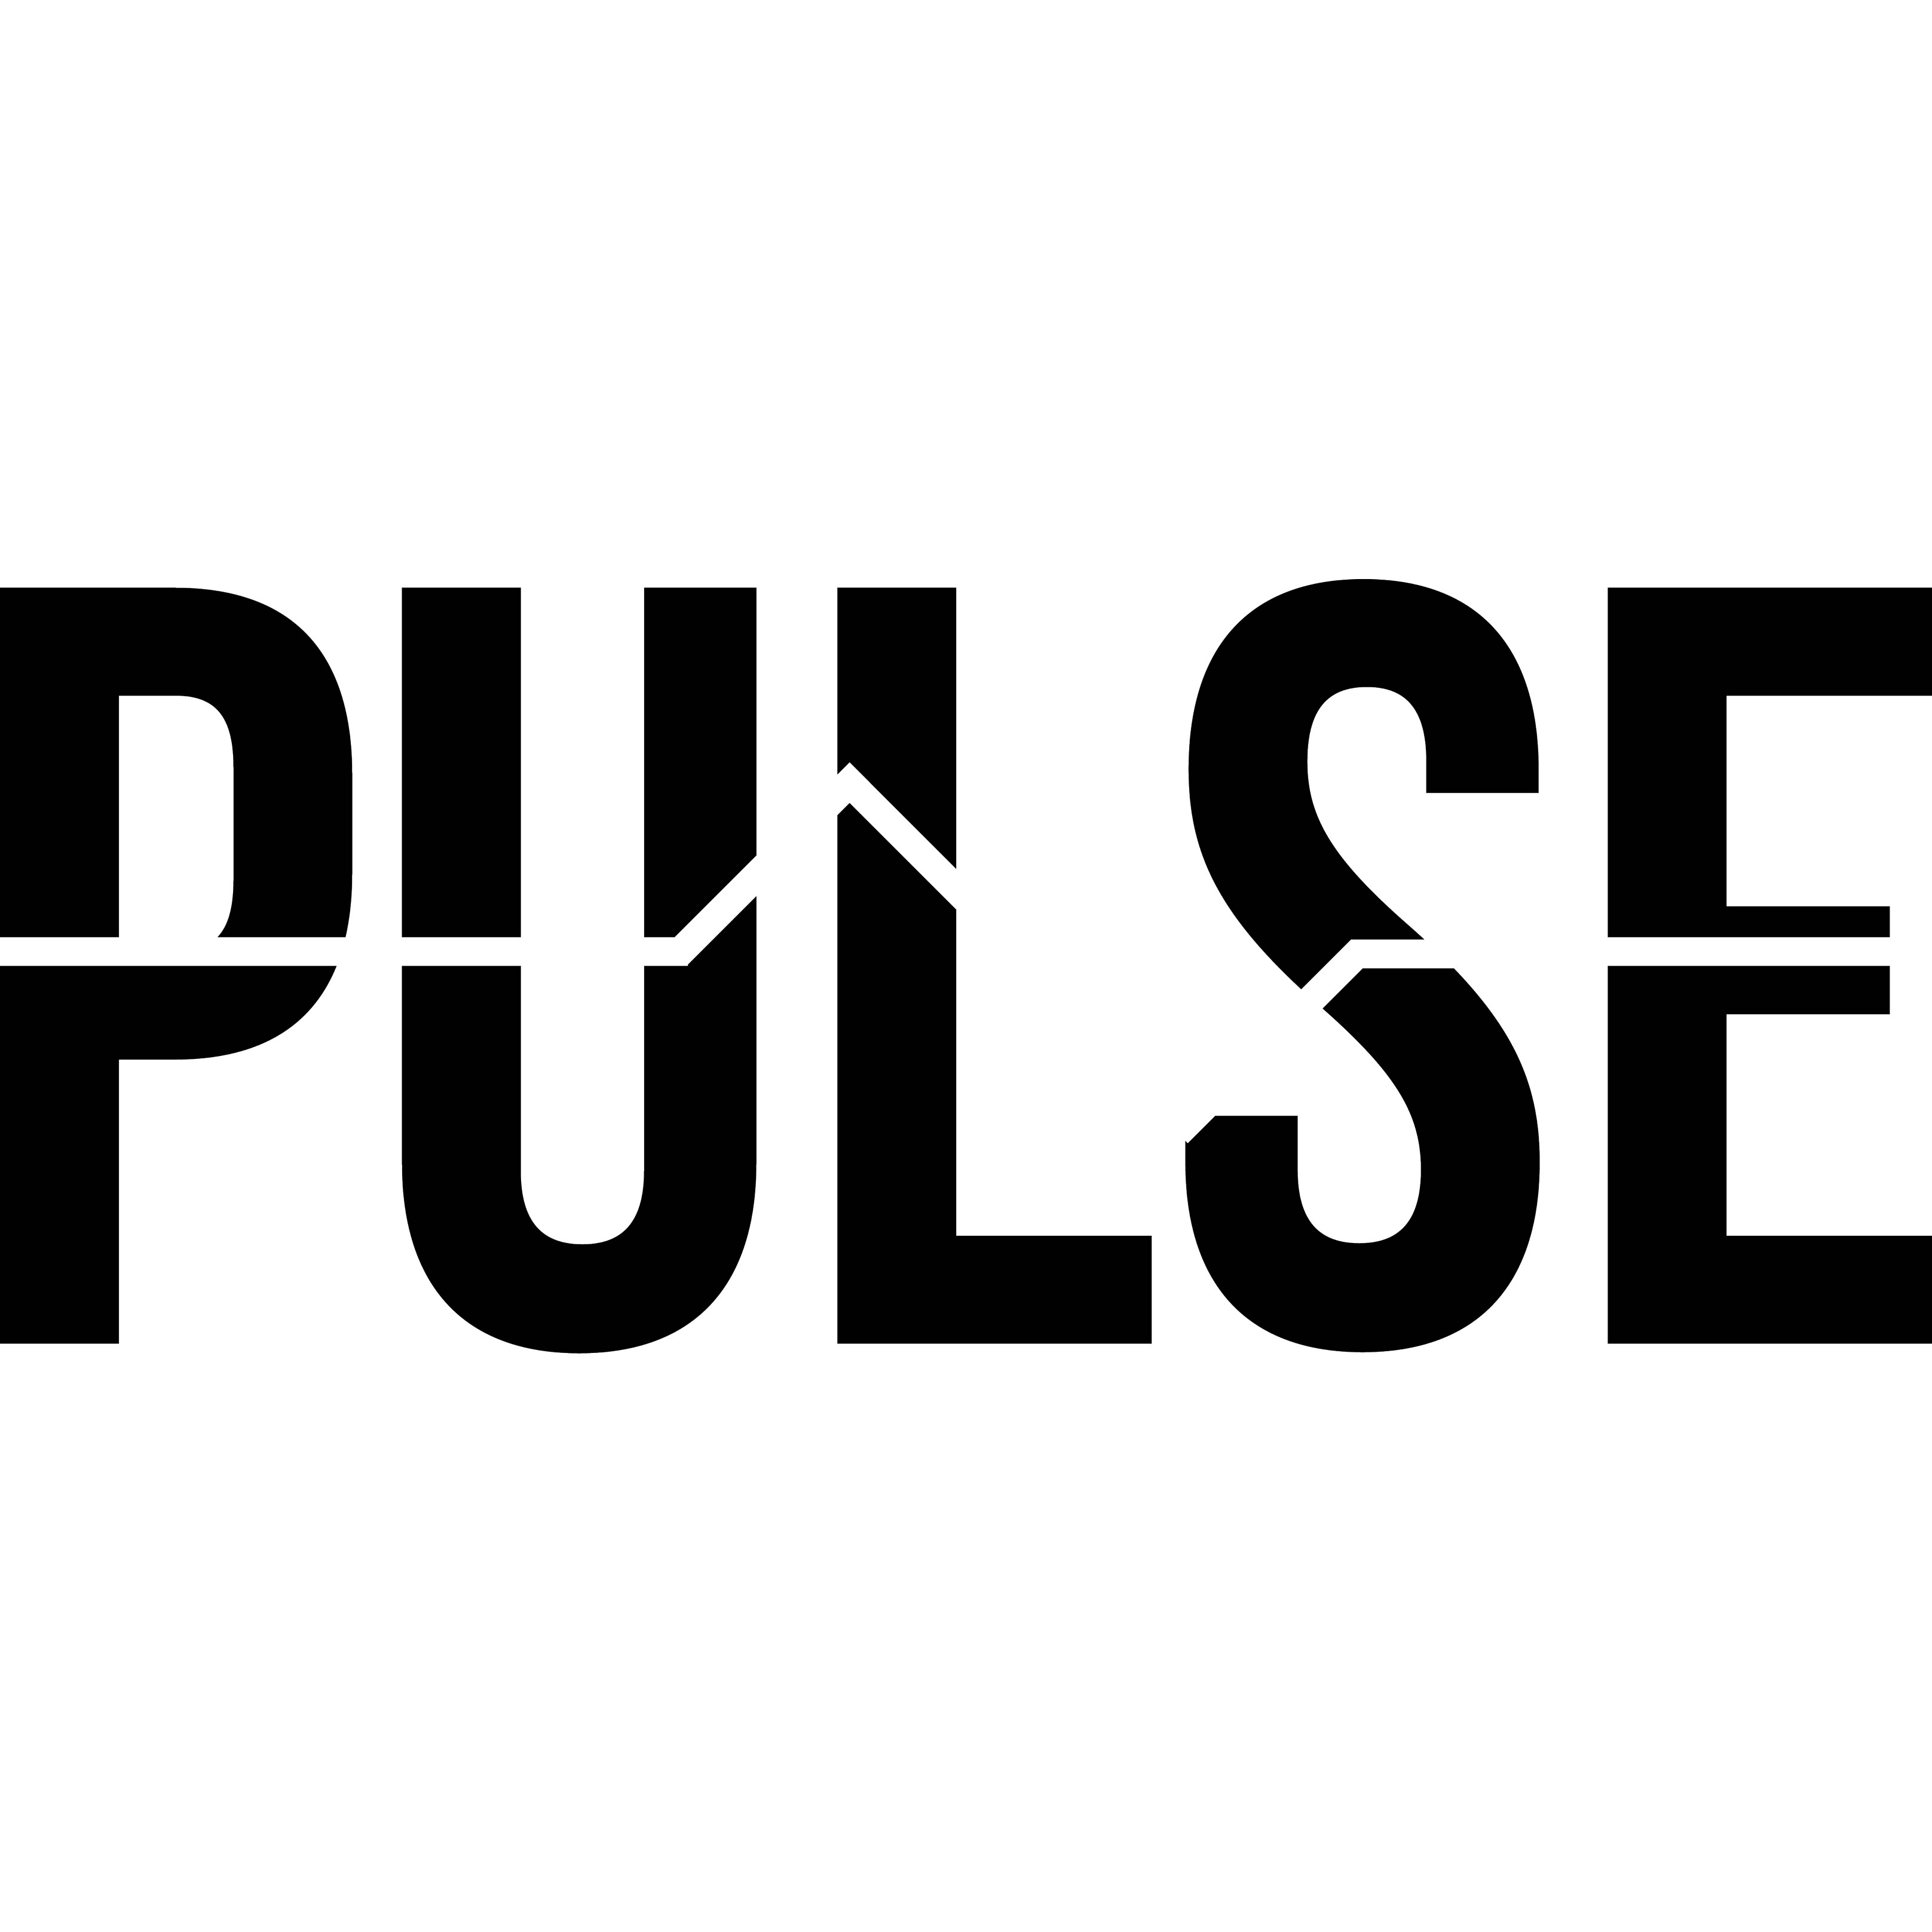 Pulse Studio